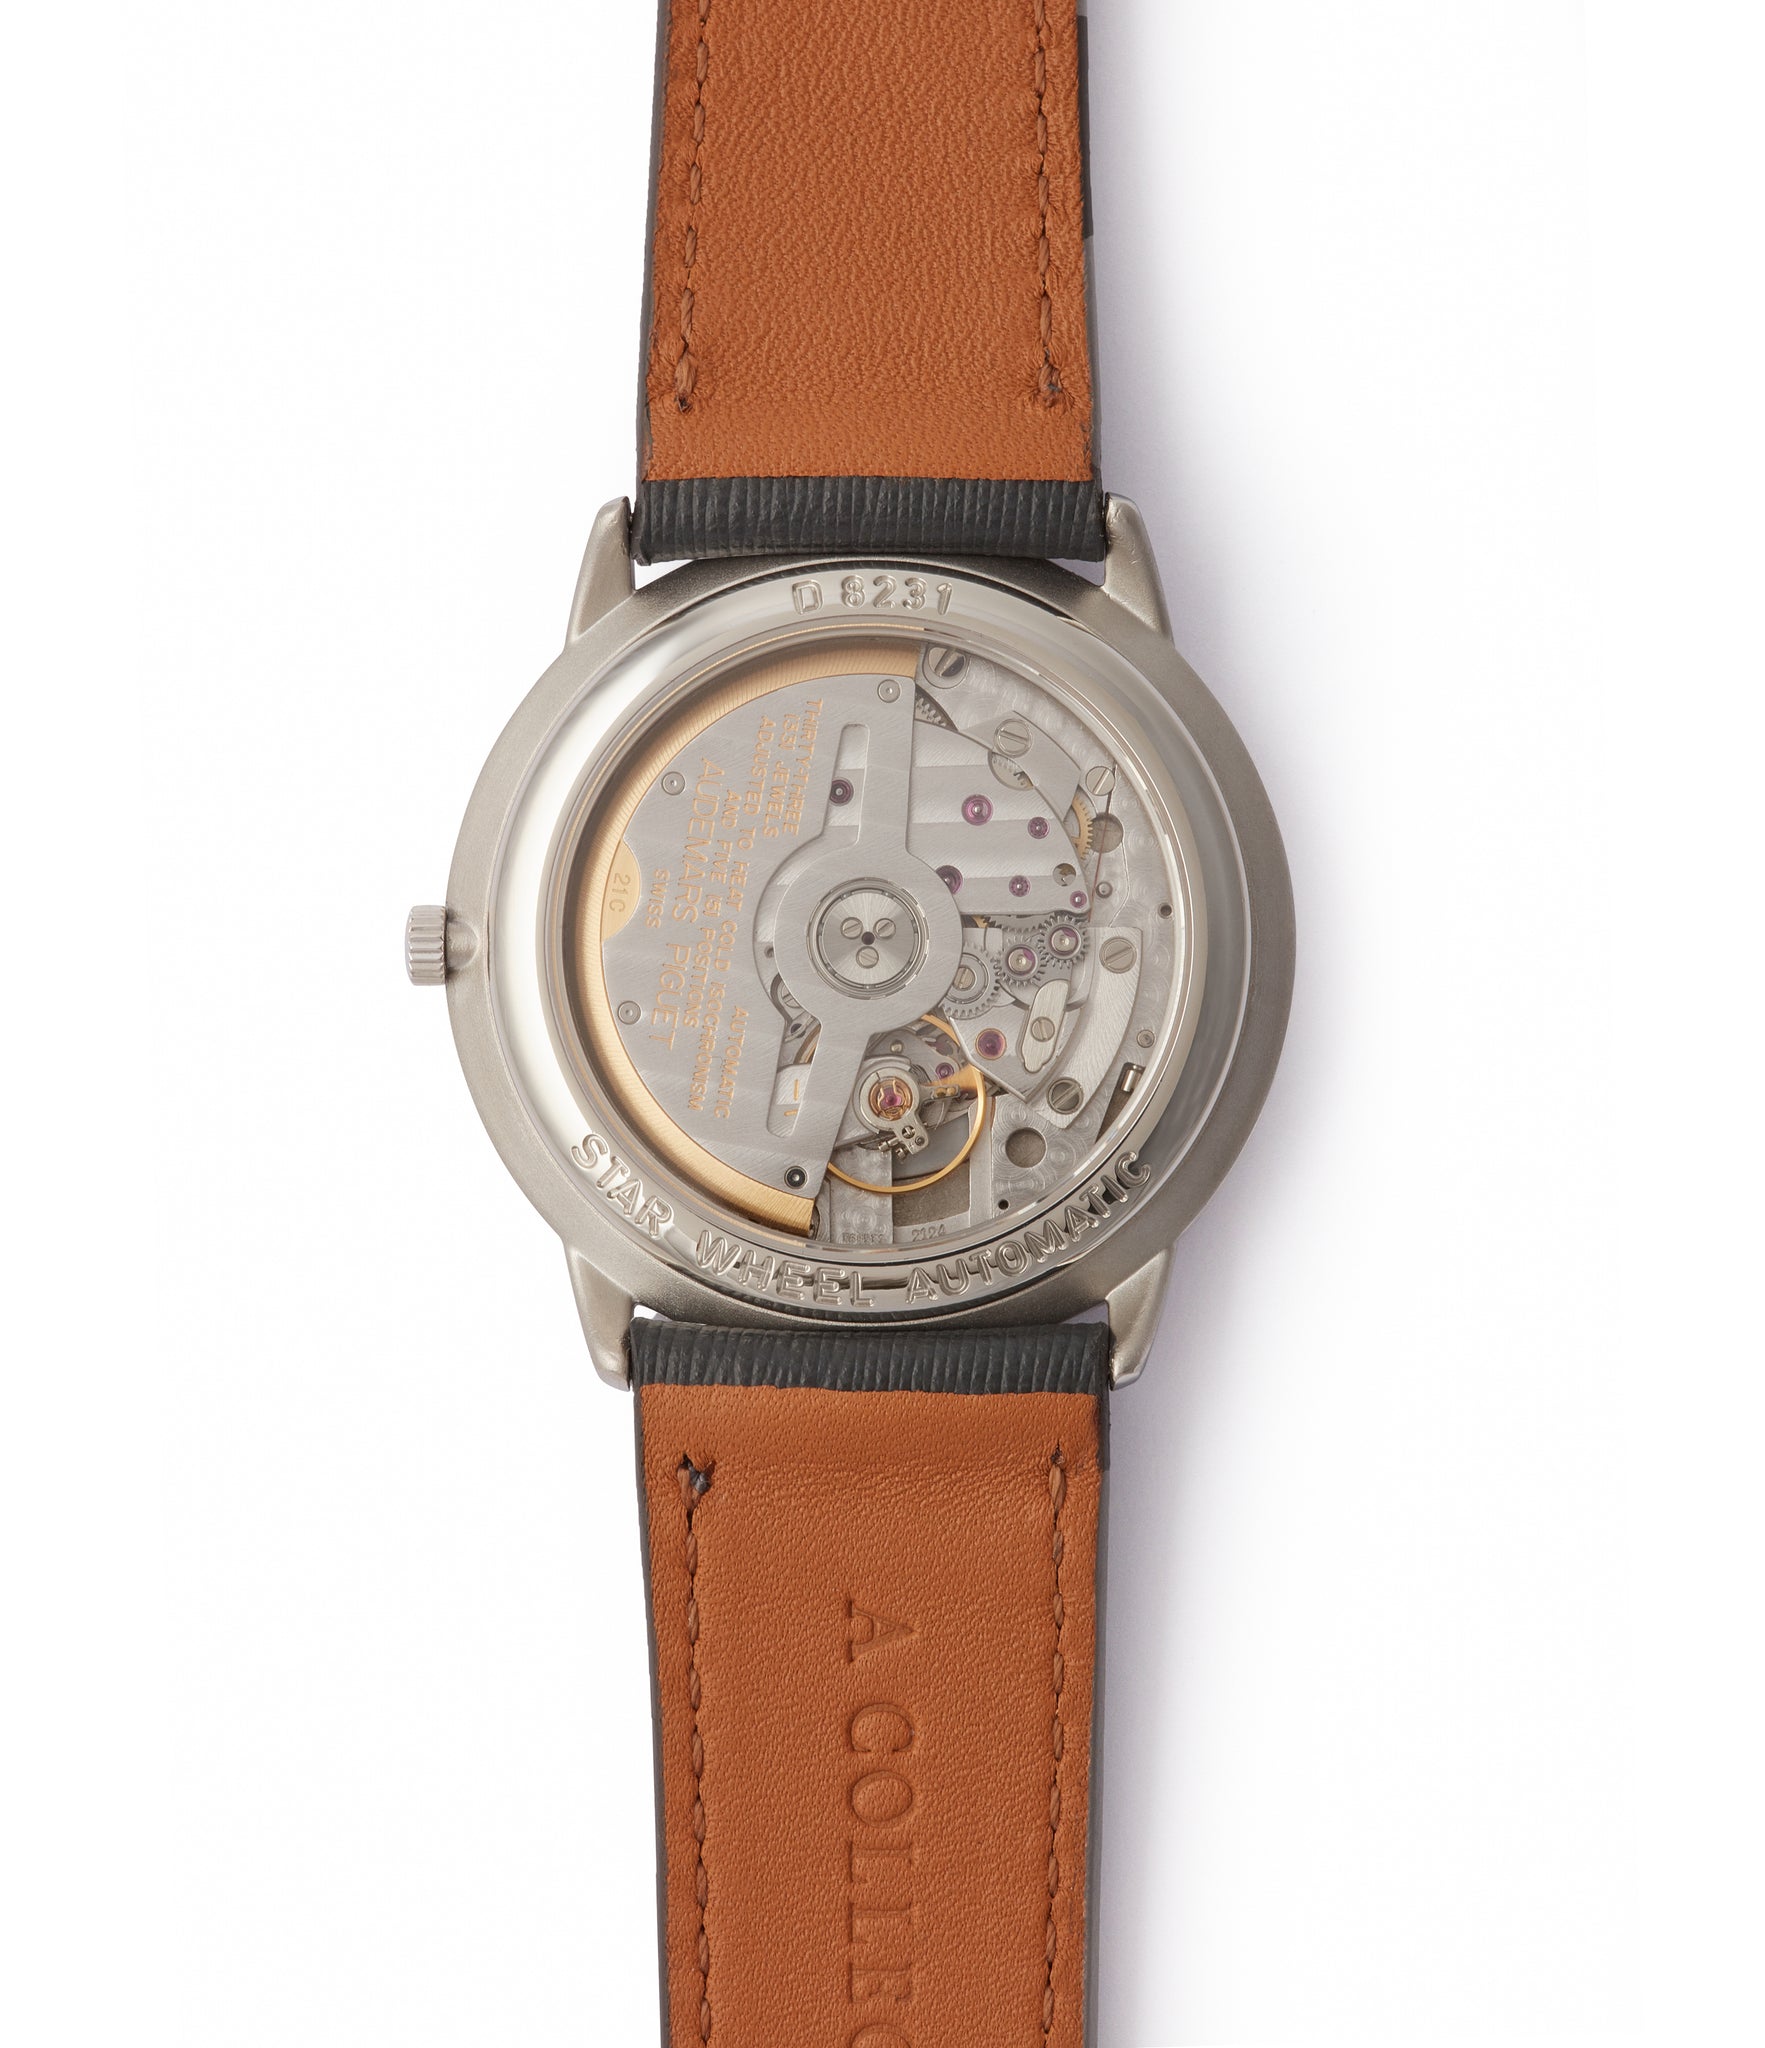 calibre 2224/2812 Audemars Piguet Star Wheel platinum time-only dress watch for sale online at A Collected Man London